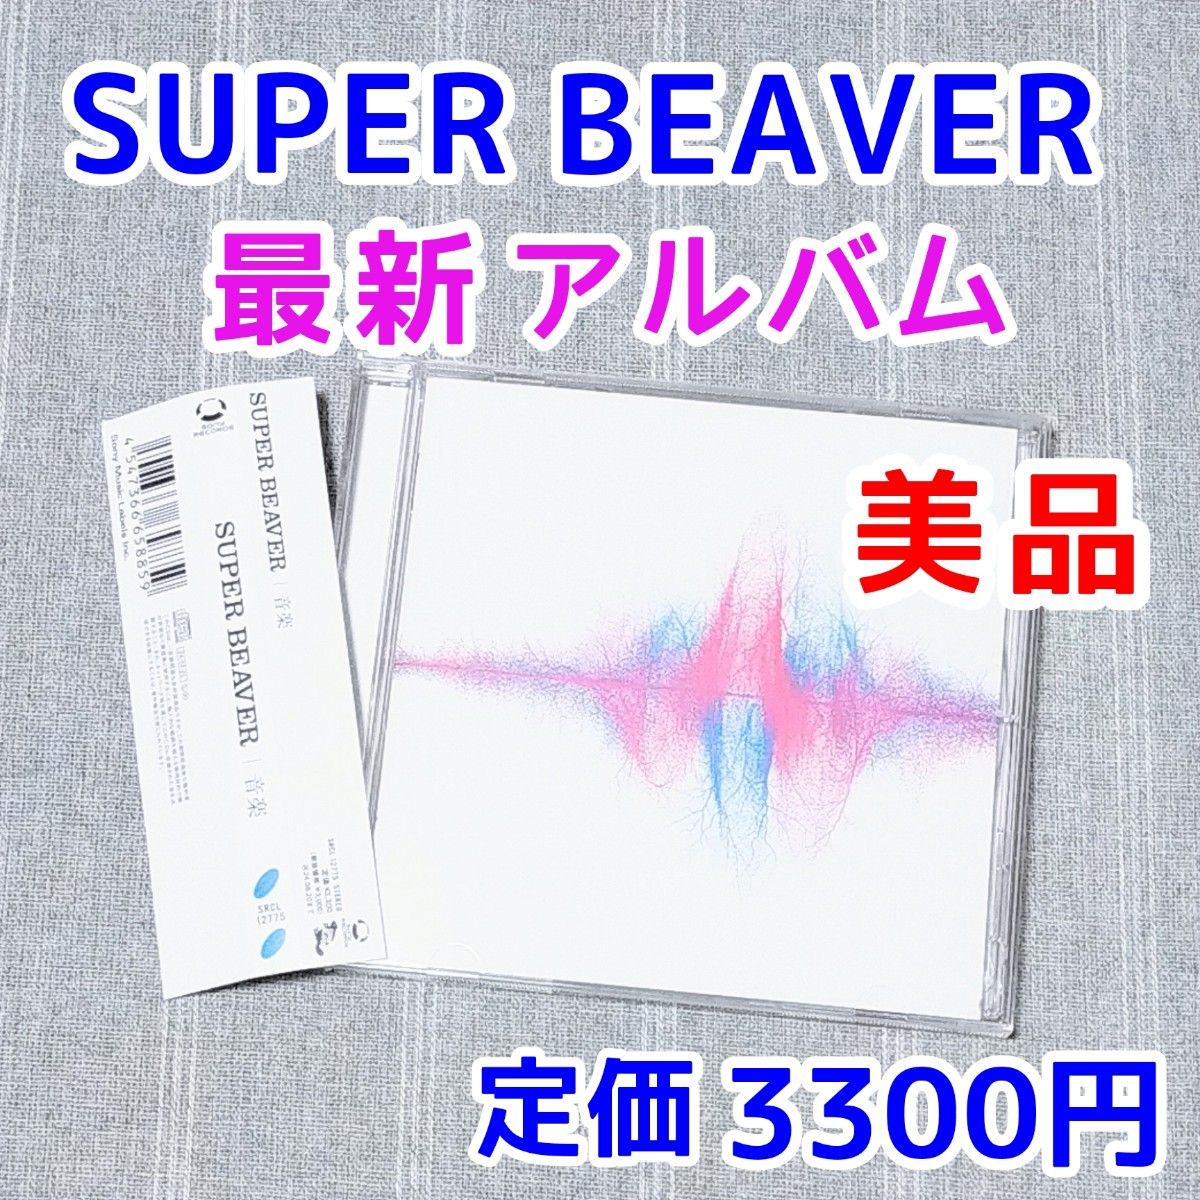 SUPER BEAVER 音楽 CDアルバム 東京リベンジャーズ 僕のヒーロー 